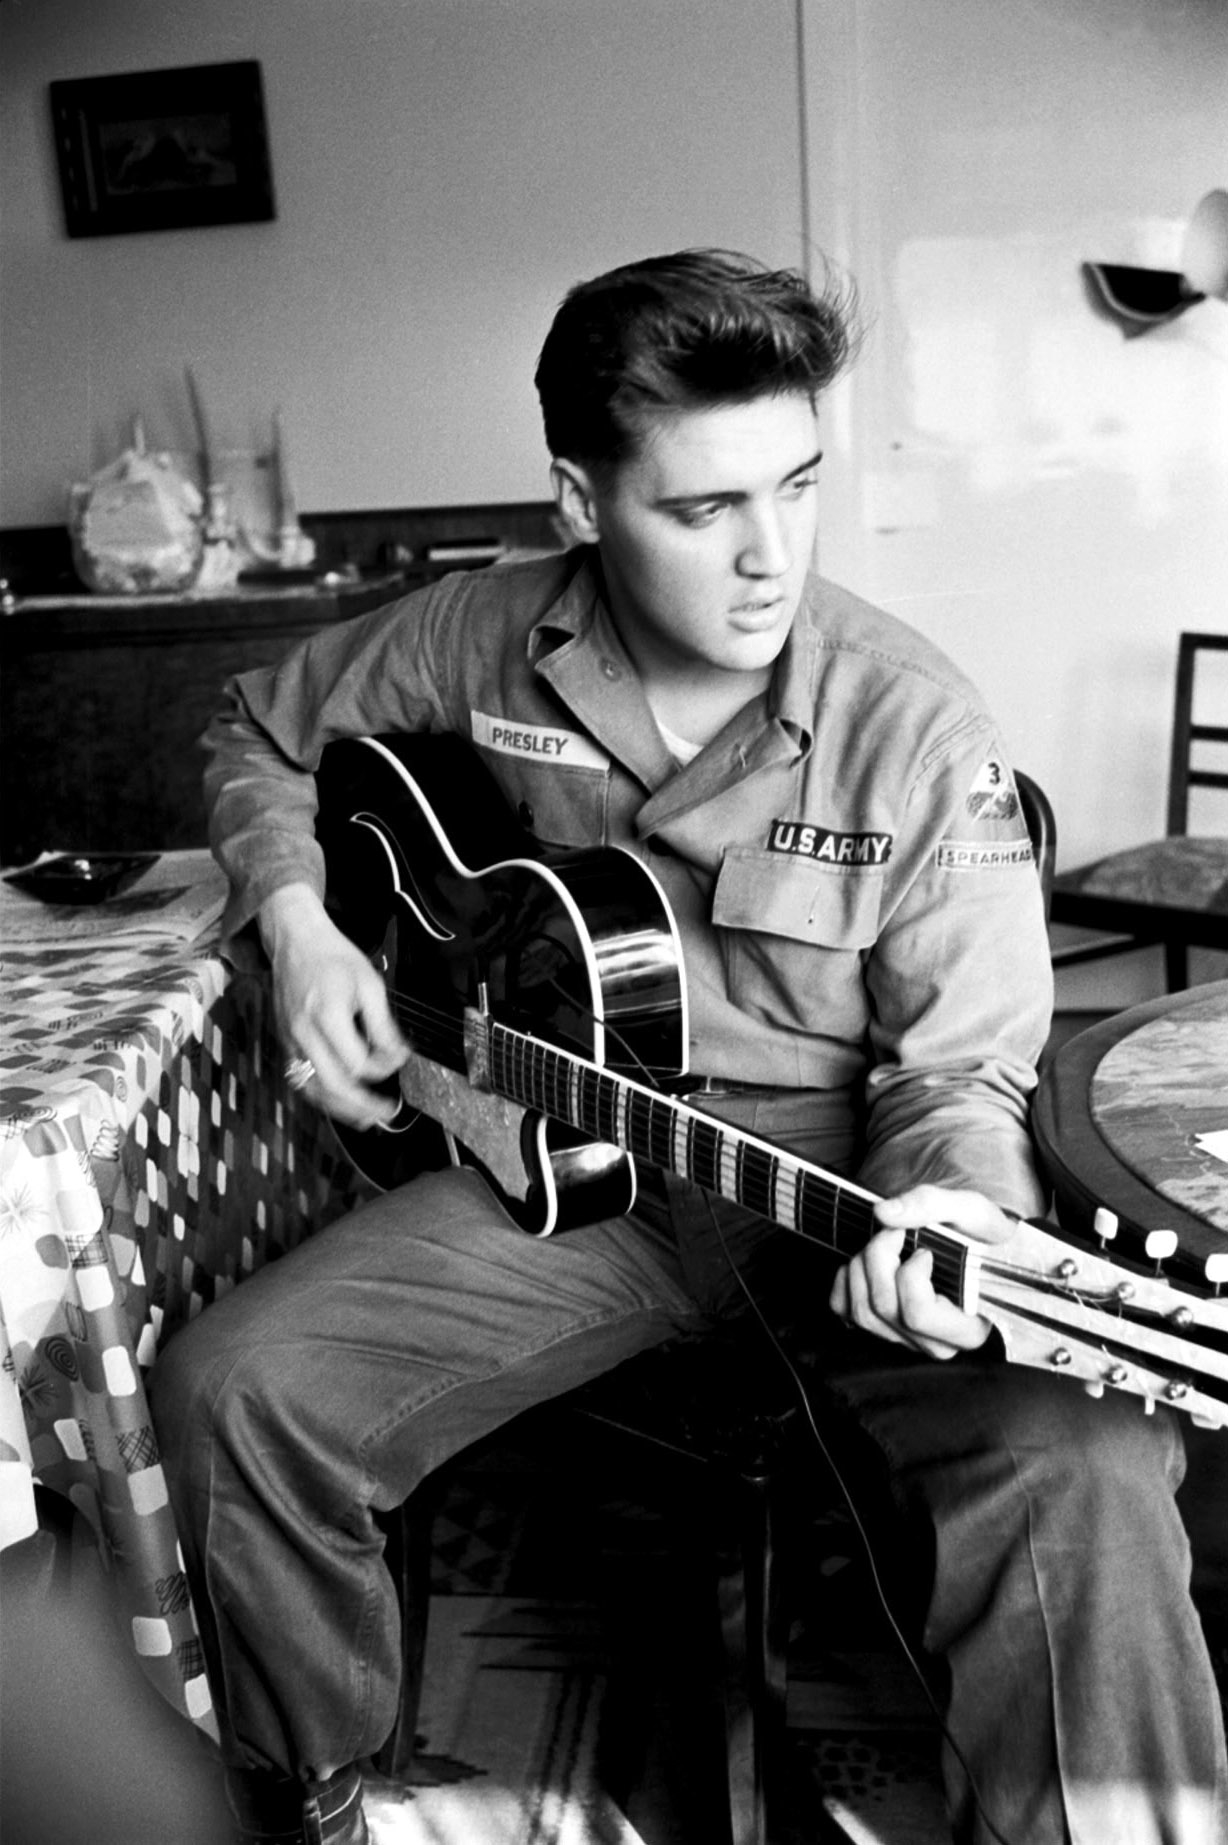 Elvis Presley photo 65 of 72 pics, wallpaper - photo #374631 - ThePlace2